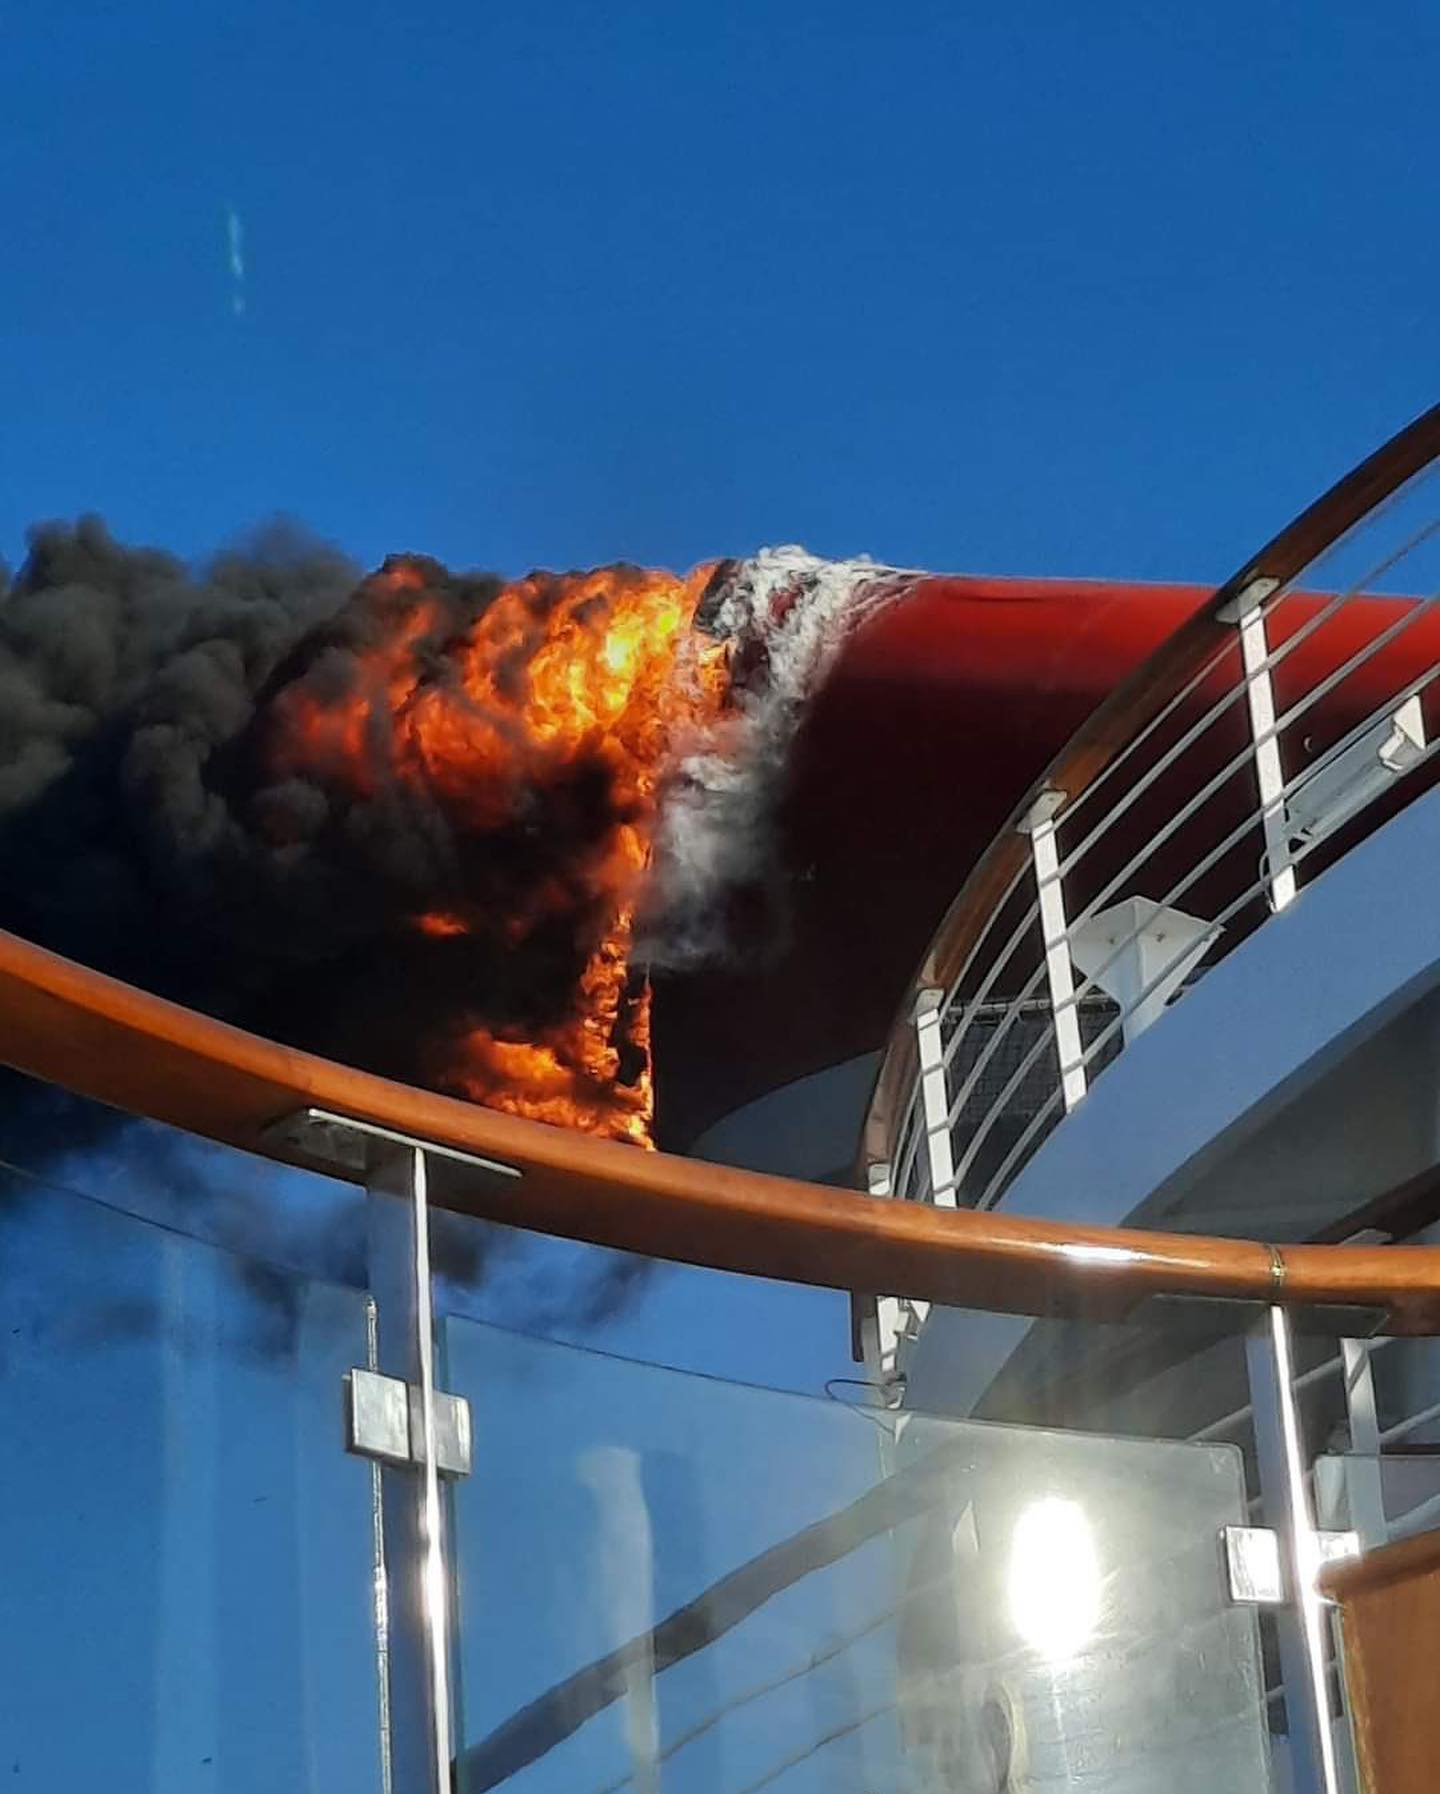 Carnival cruise ship fire - sky